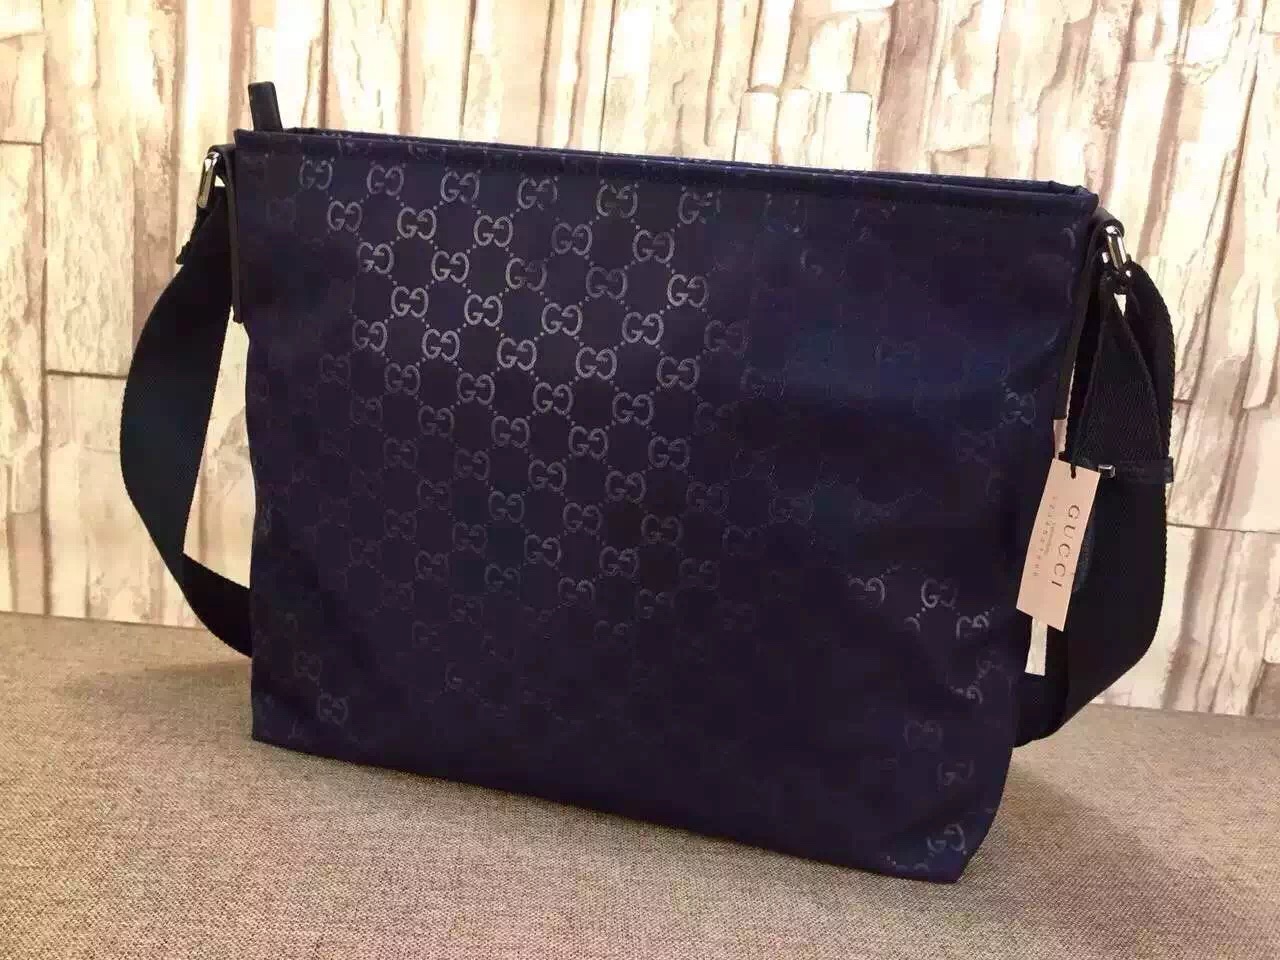 Gucci Bag in Black colour-GU50116 [GU50116] - $99.00USD : USPURSE ...